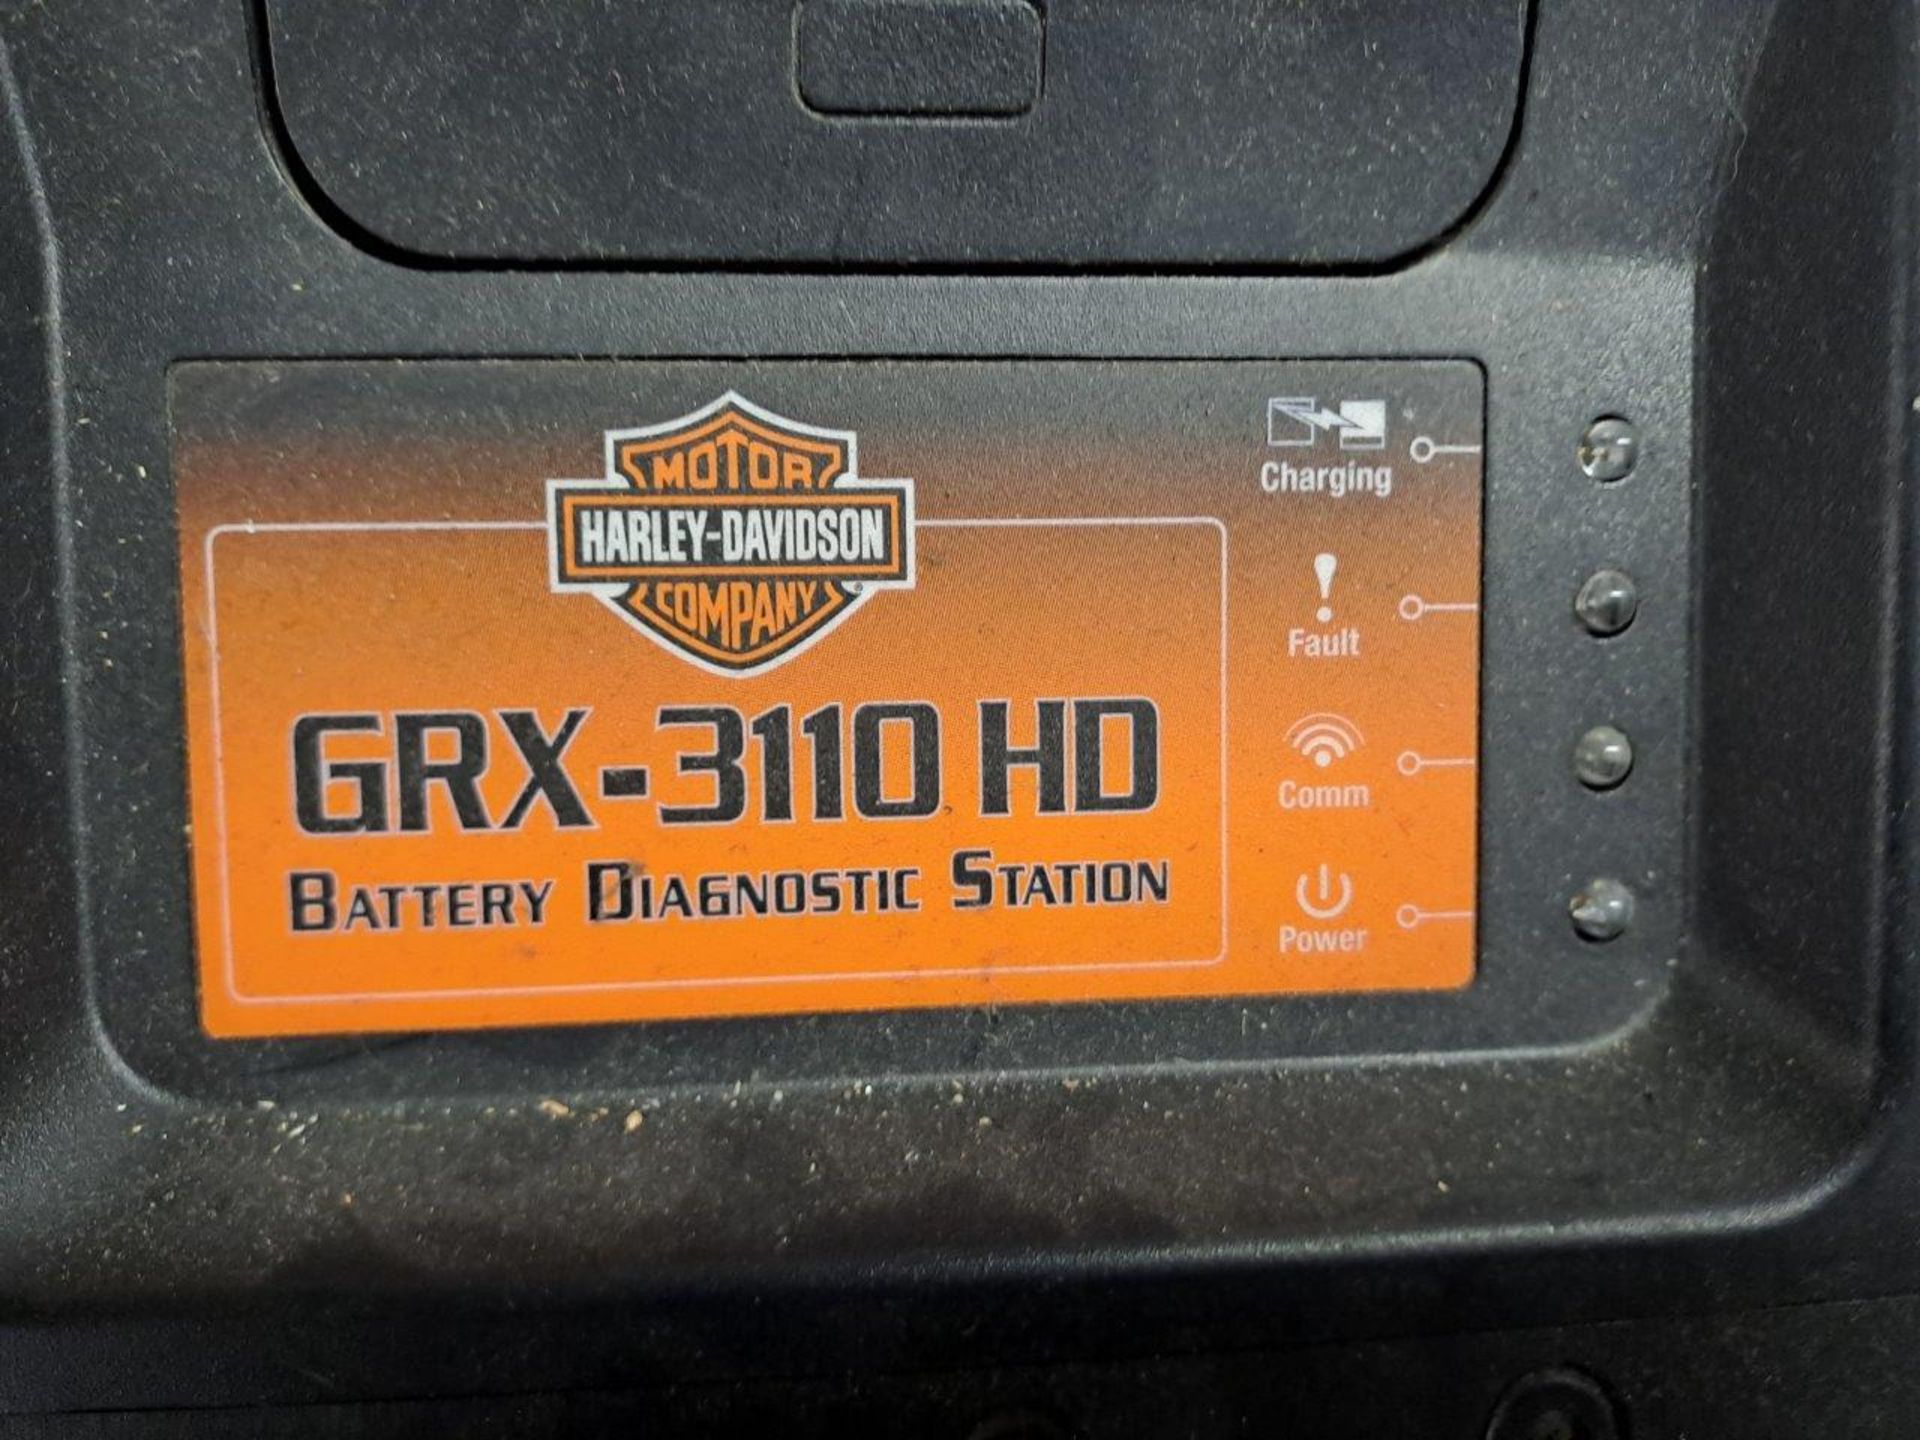 Harley Davidson GRX-3110 HD Battery Diagnostic Station - Image 3 of 7